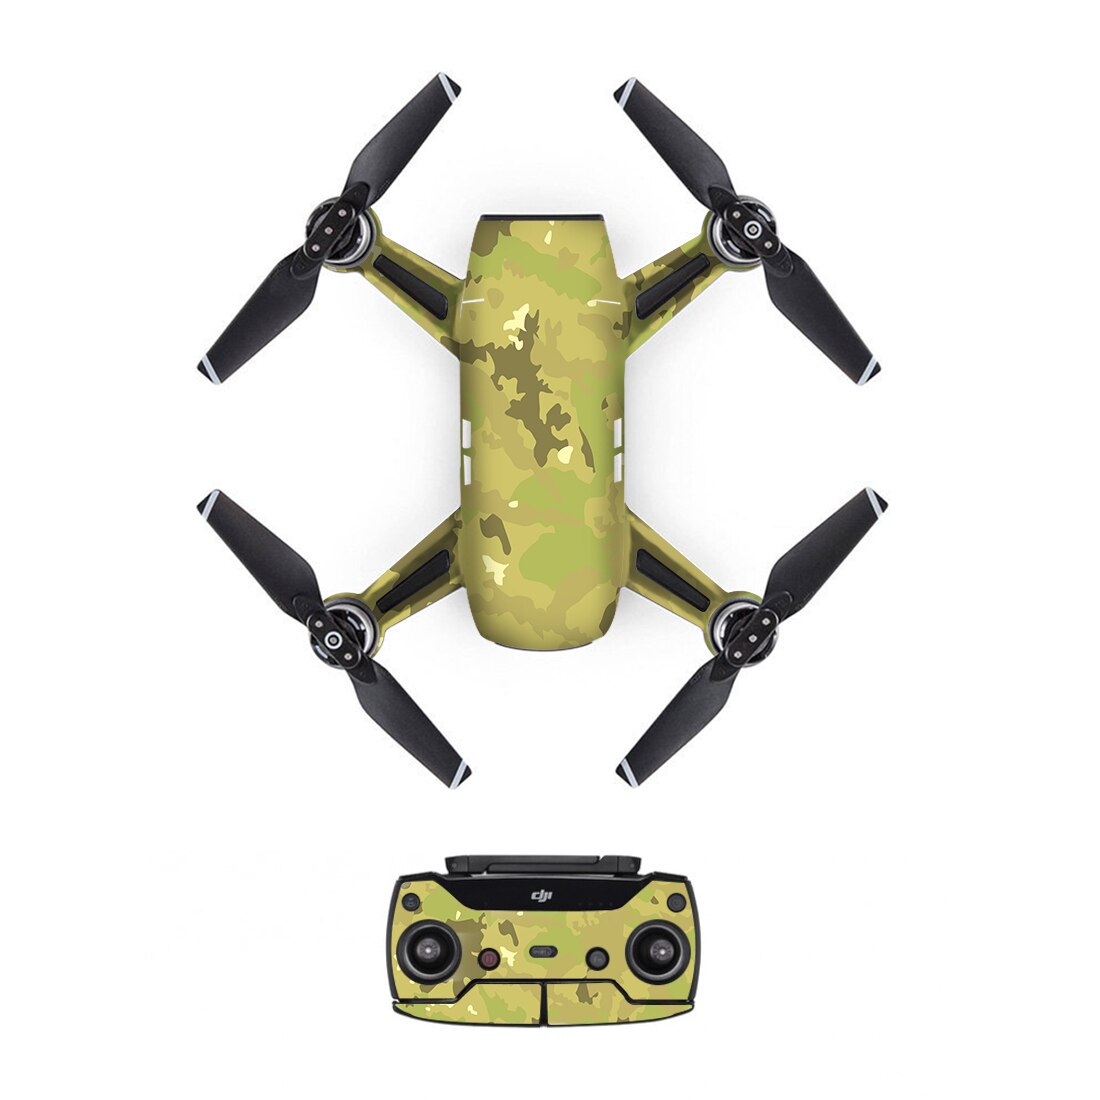 [DJS0017] Camouflage Pvc Sticker Skin Sticker Voor Dji Spark Drone Body + Remote Controllers + 3 Batterij Beschermende cover